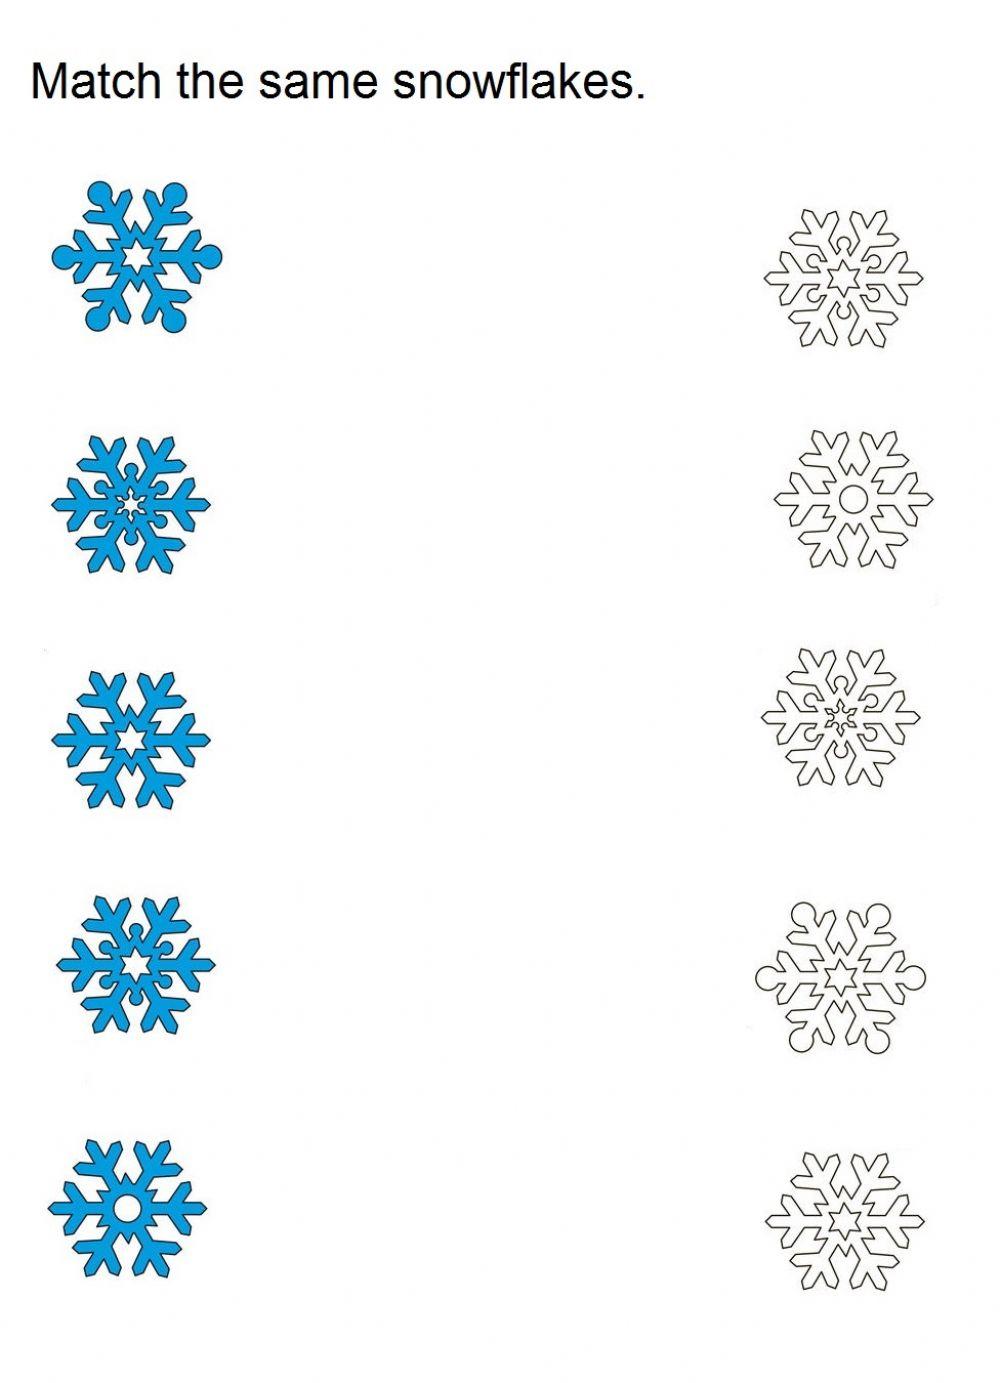 Snowflakes match